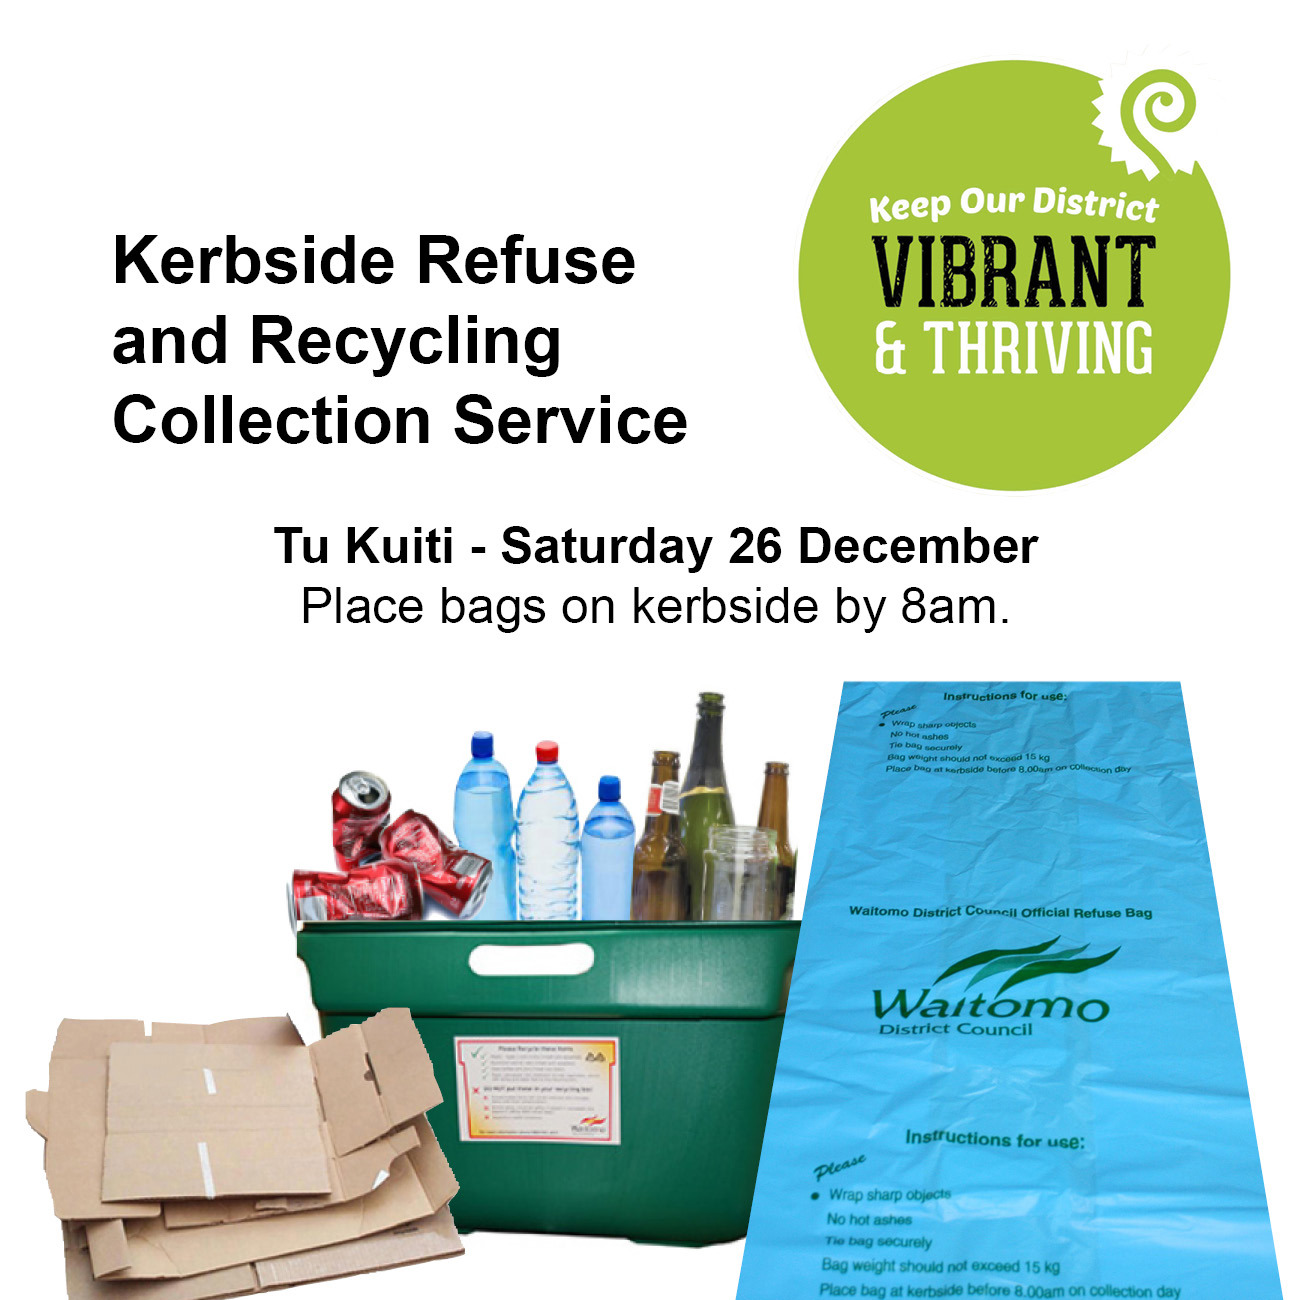 Kerbside collection service Te Kuiti